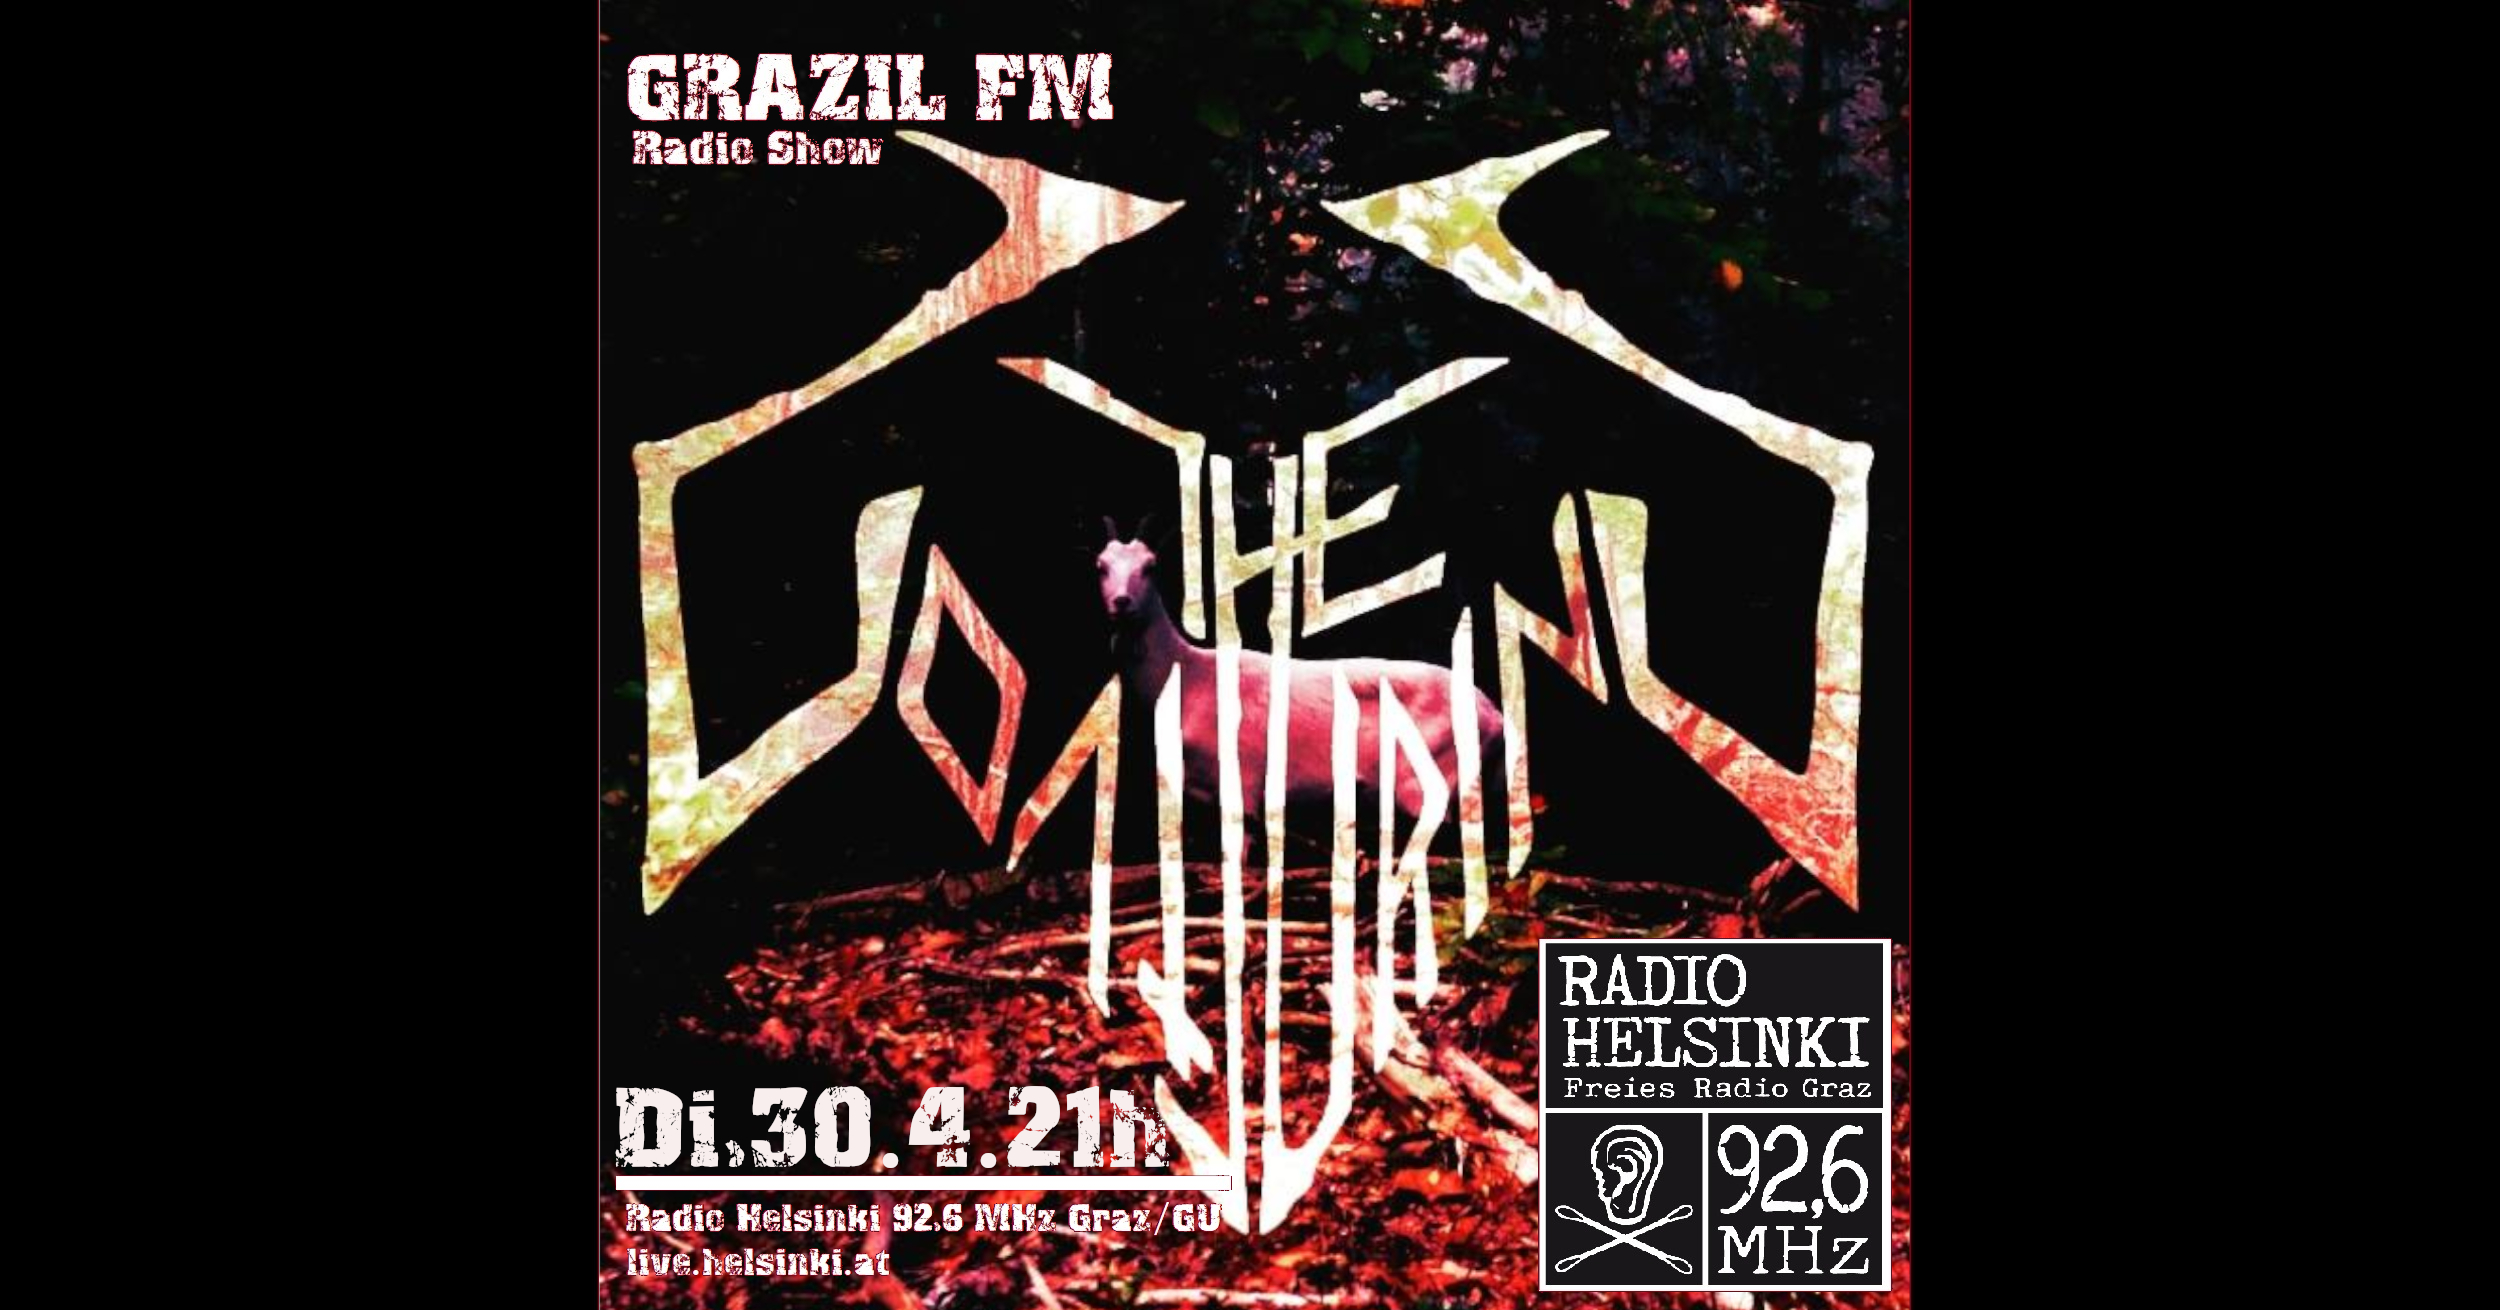 grazil FM The Goatjuring Radio Helsinki Cle Pecher grazil Records